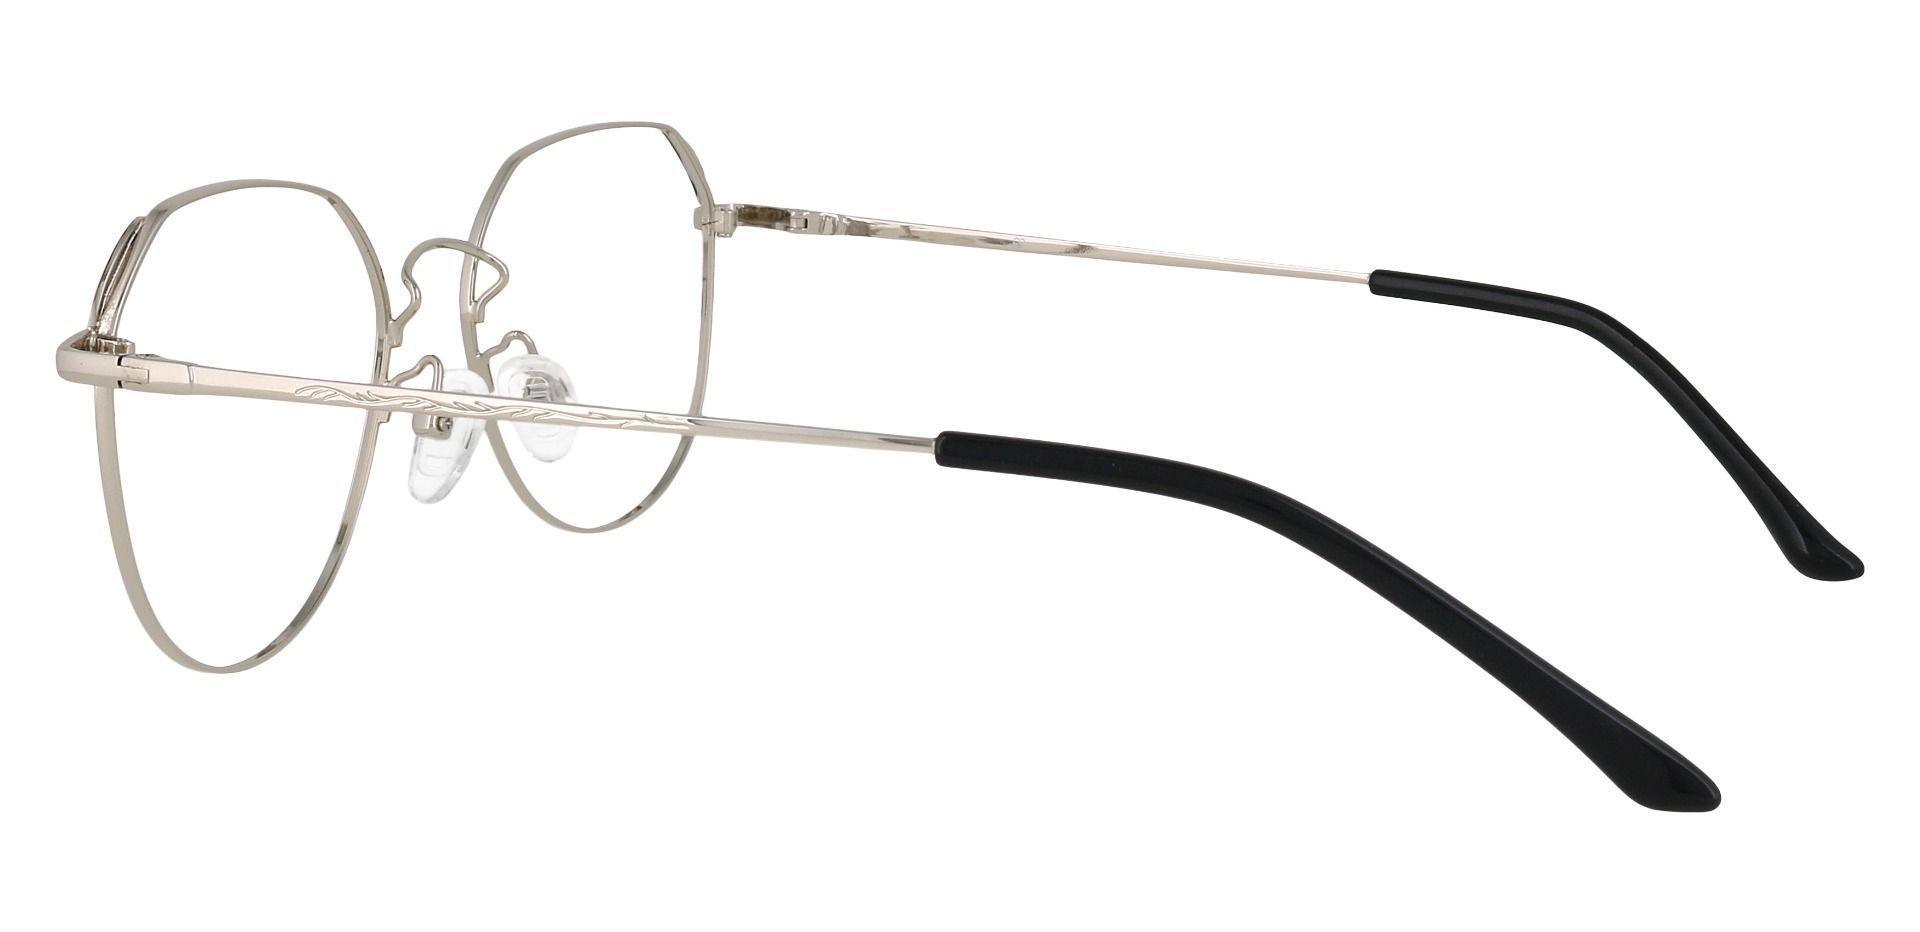 Figaro Geometric Lined Bifocal Glasses - Silver